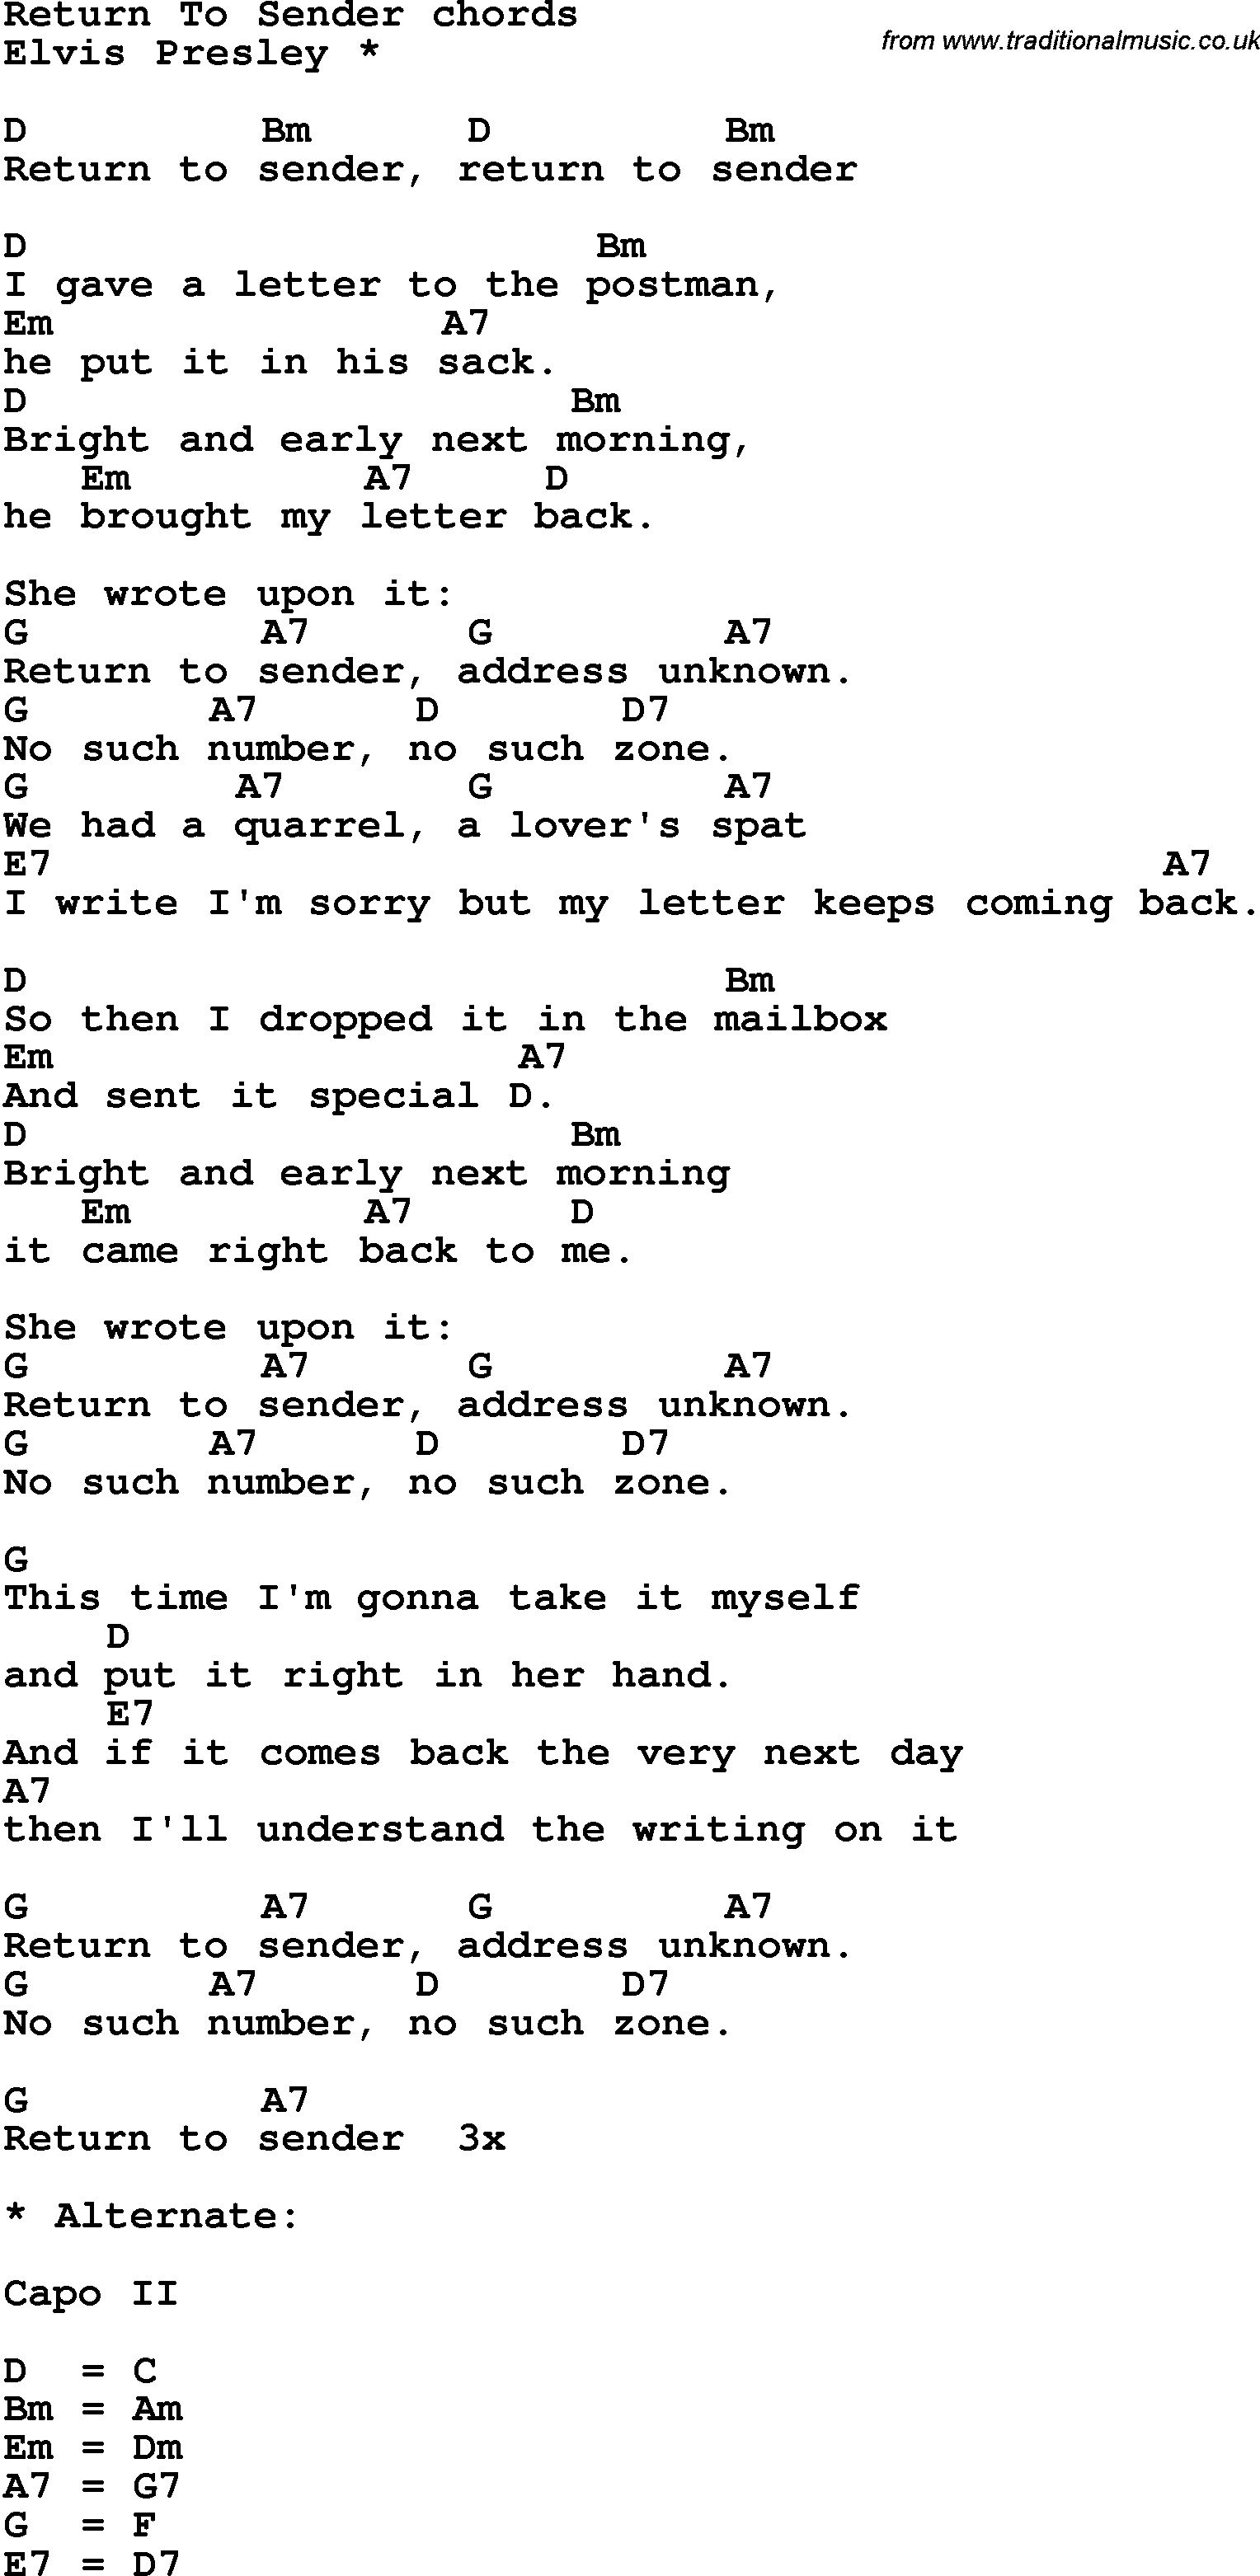 Song Lyrics with guitar chords for Return To Sender